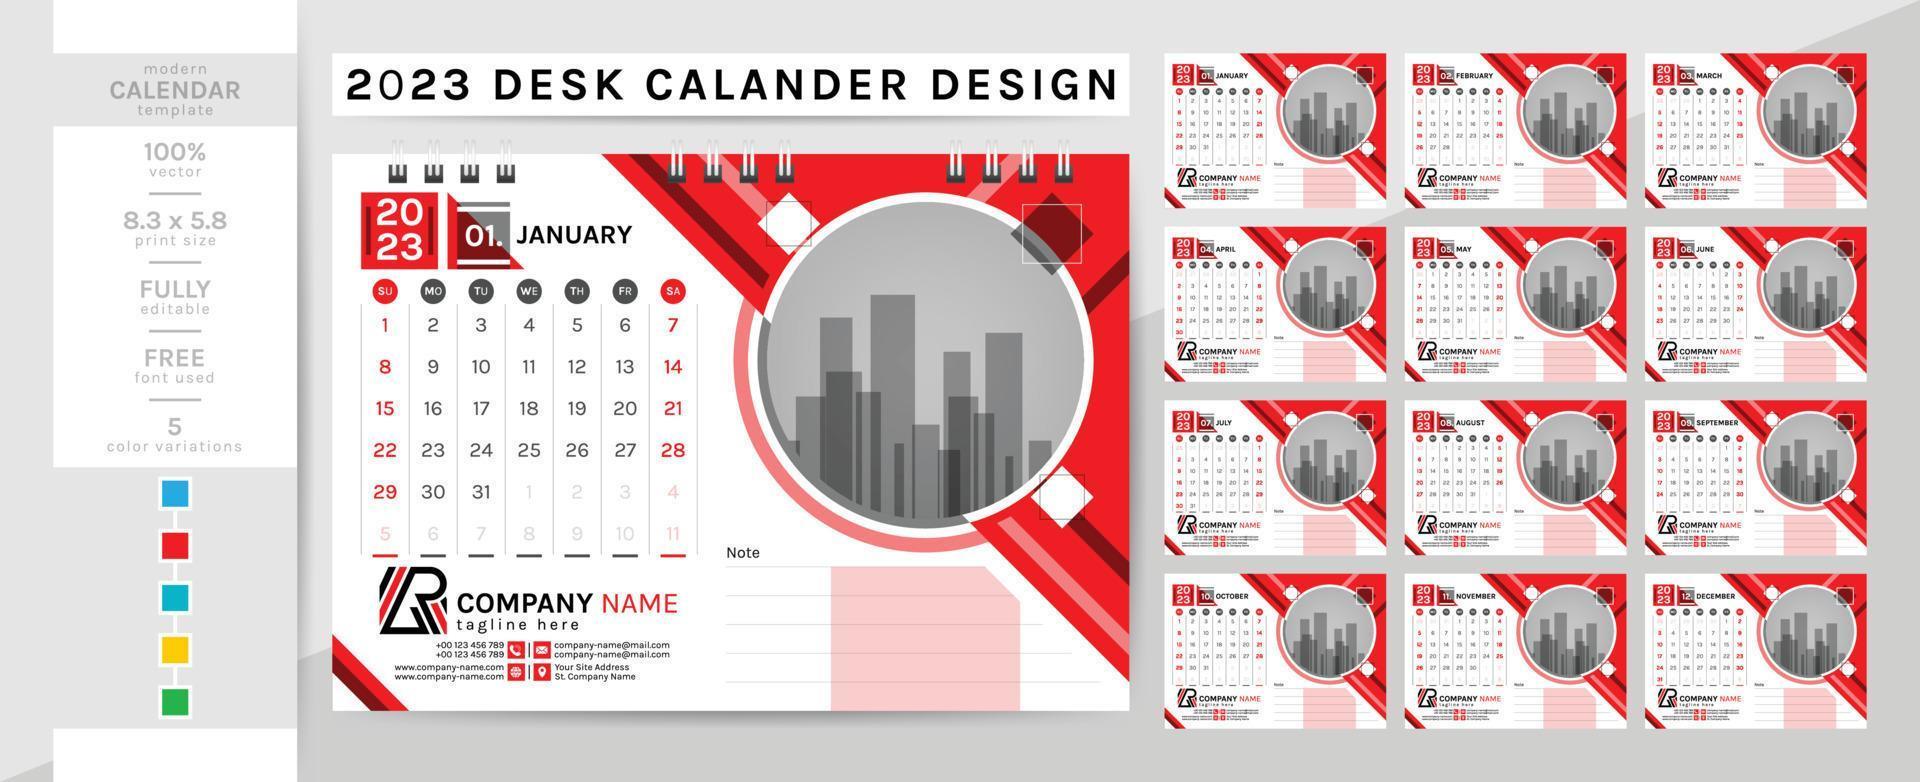 Creative elegant desk calendar template for the 2023 year. The week starts on Sunday. vector